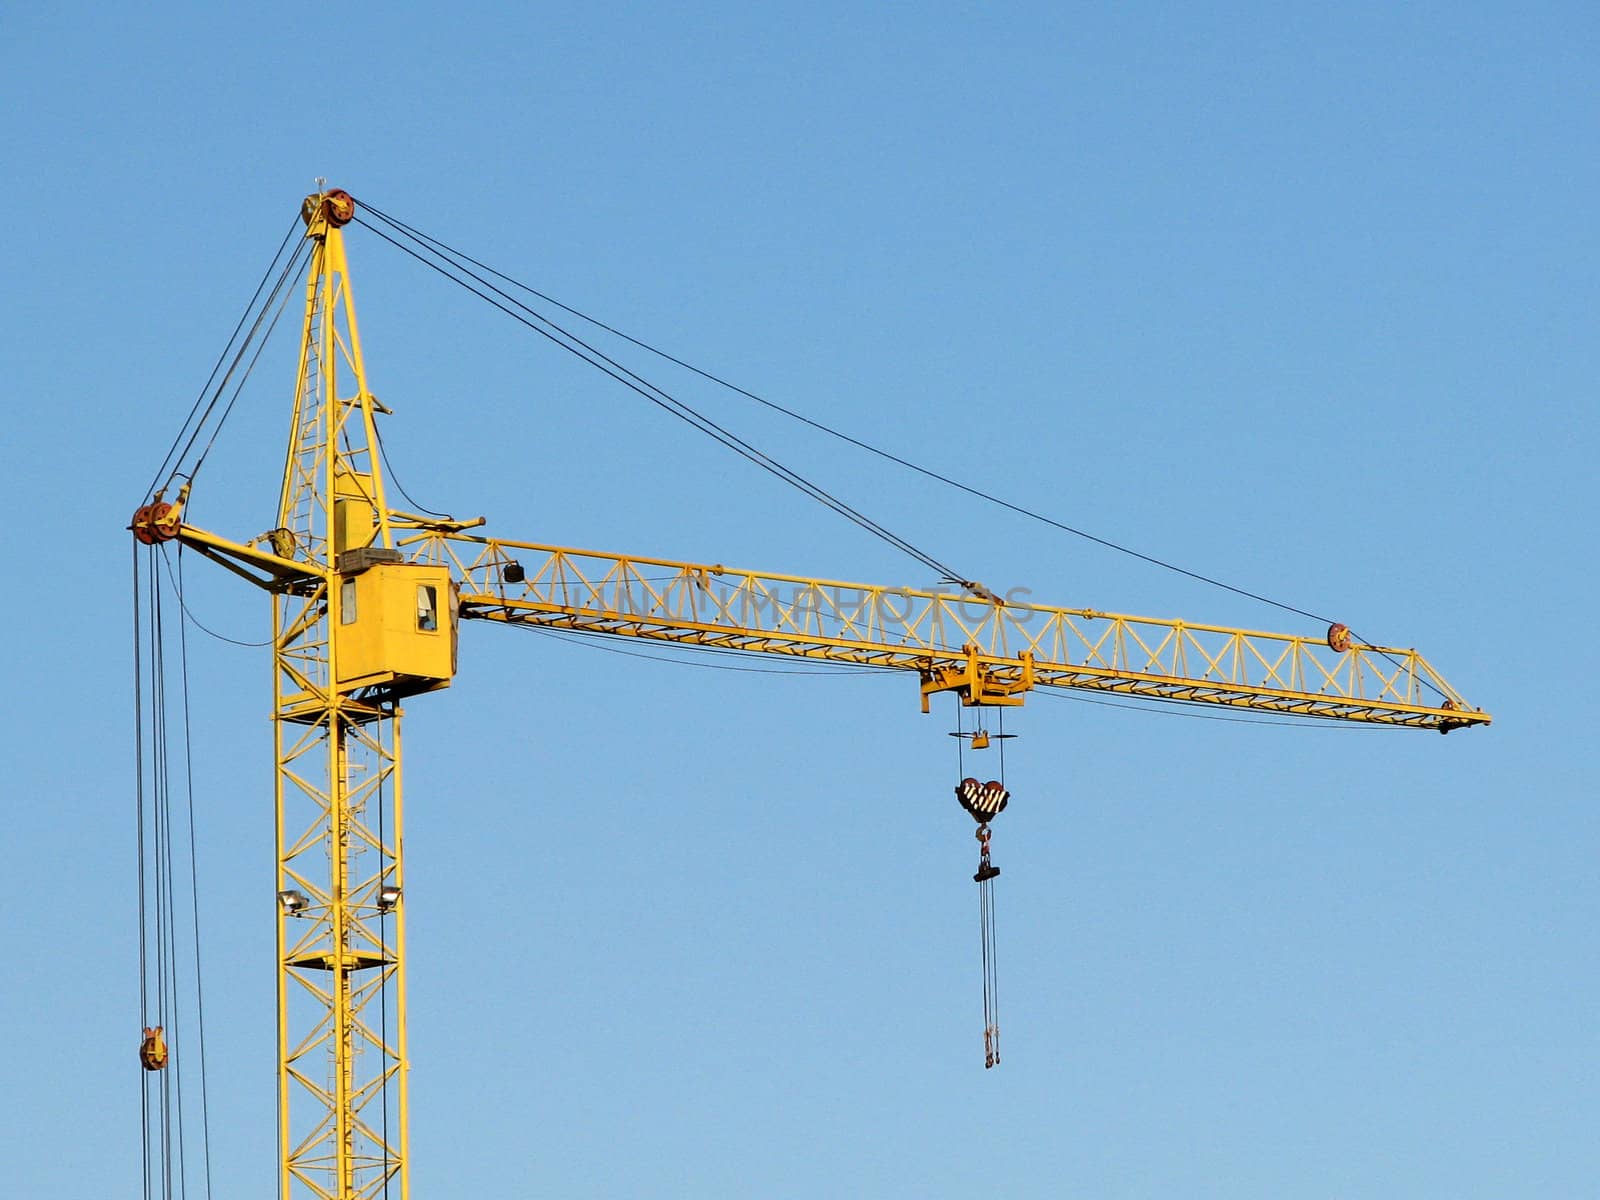 the hoisting crane by veronka72